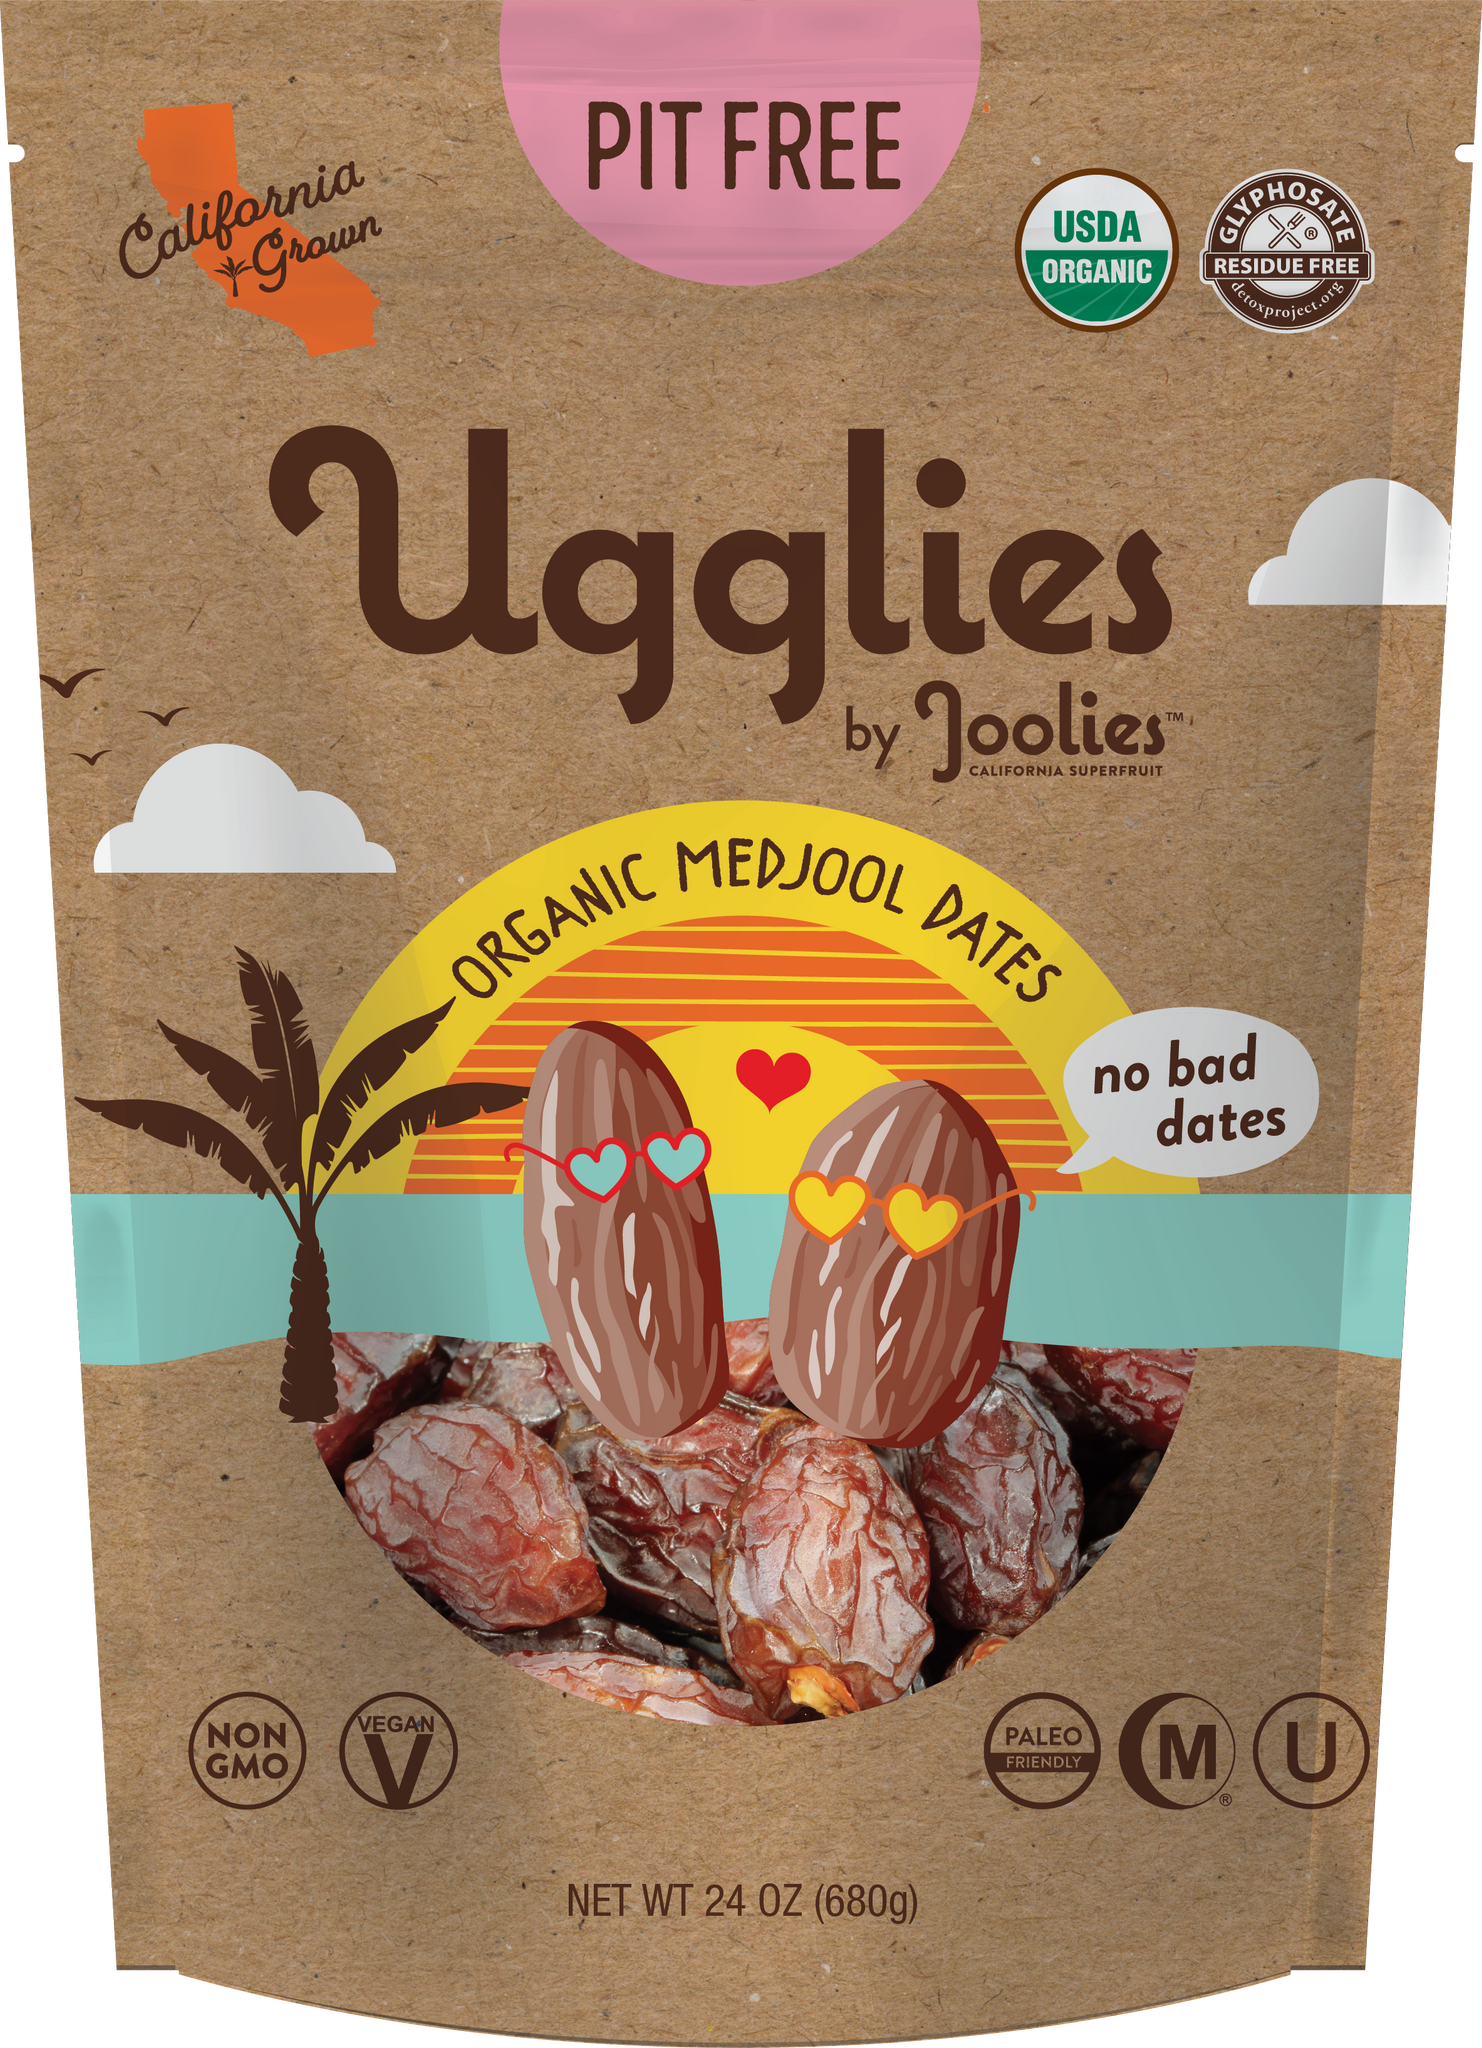 Ugglies by Joolies - Pit Free Organic Medjool Dates - 1.5LB BAG